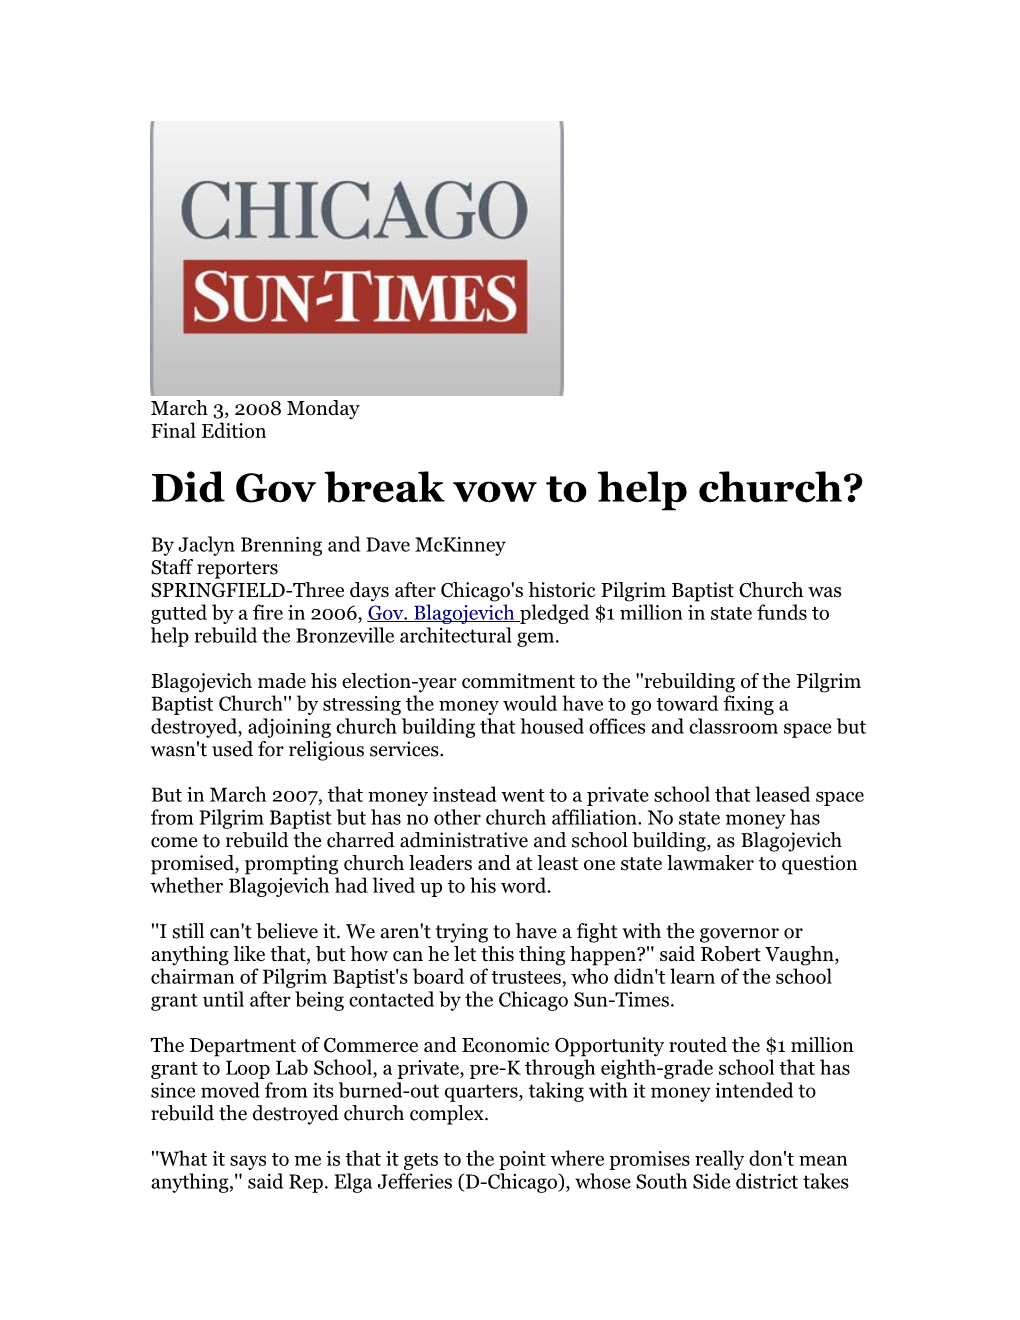 Did Gov Break Vow to Help Church?